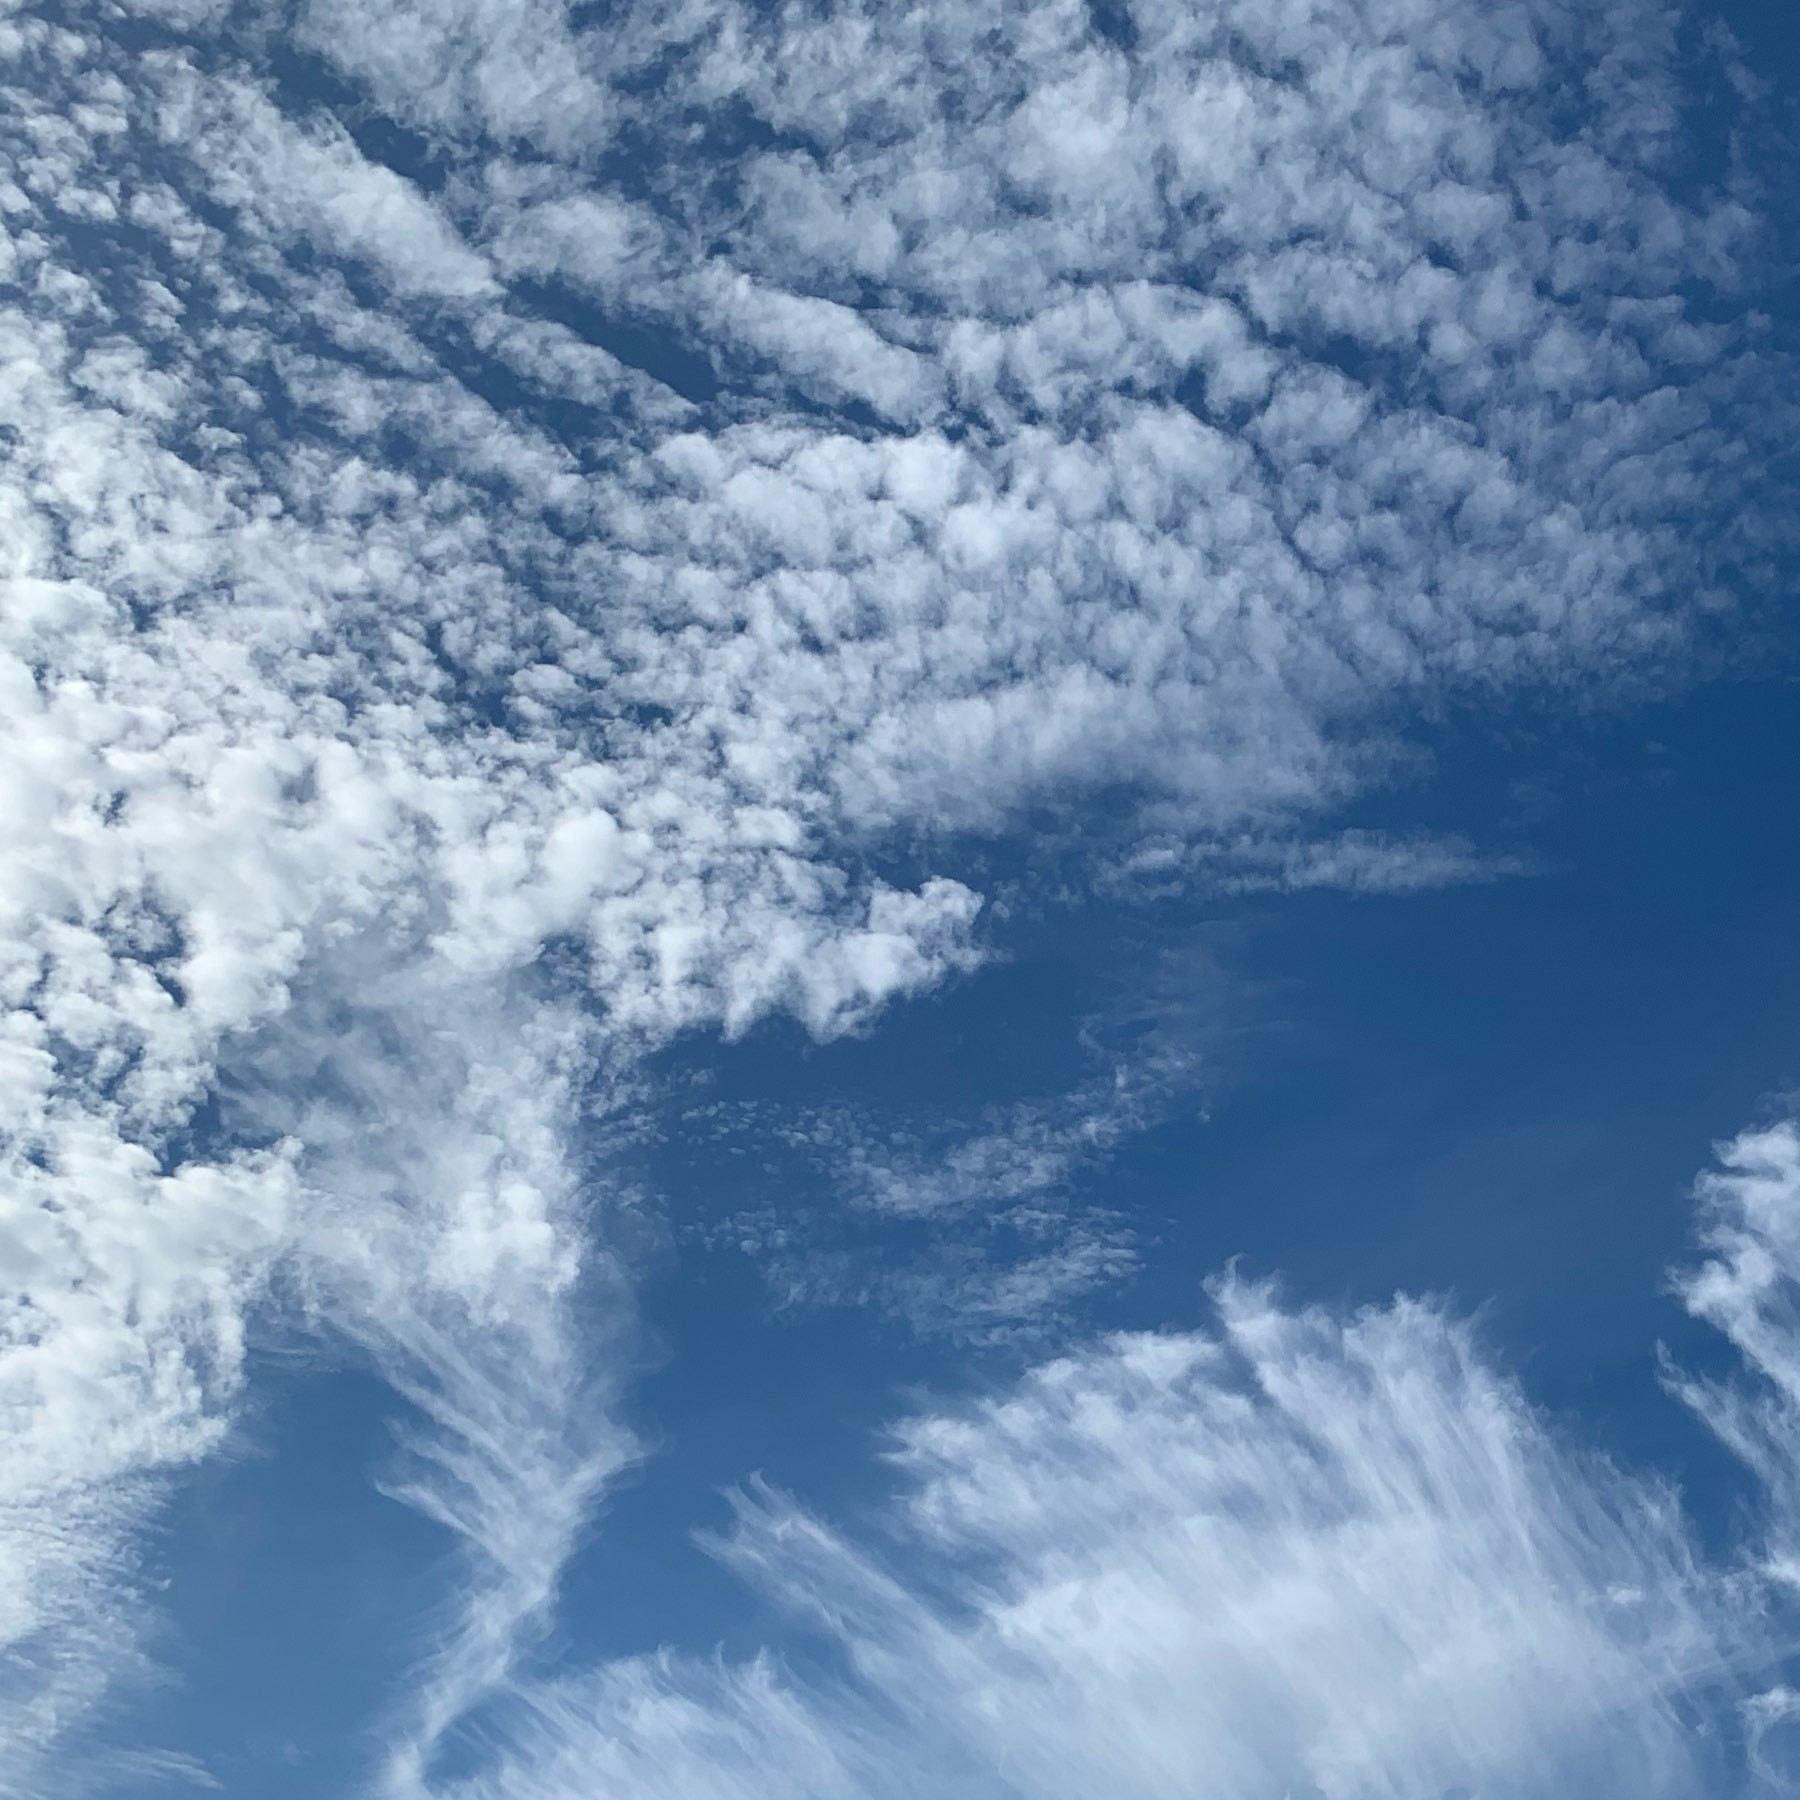 Clouds against a blue sky